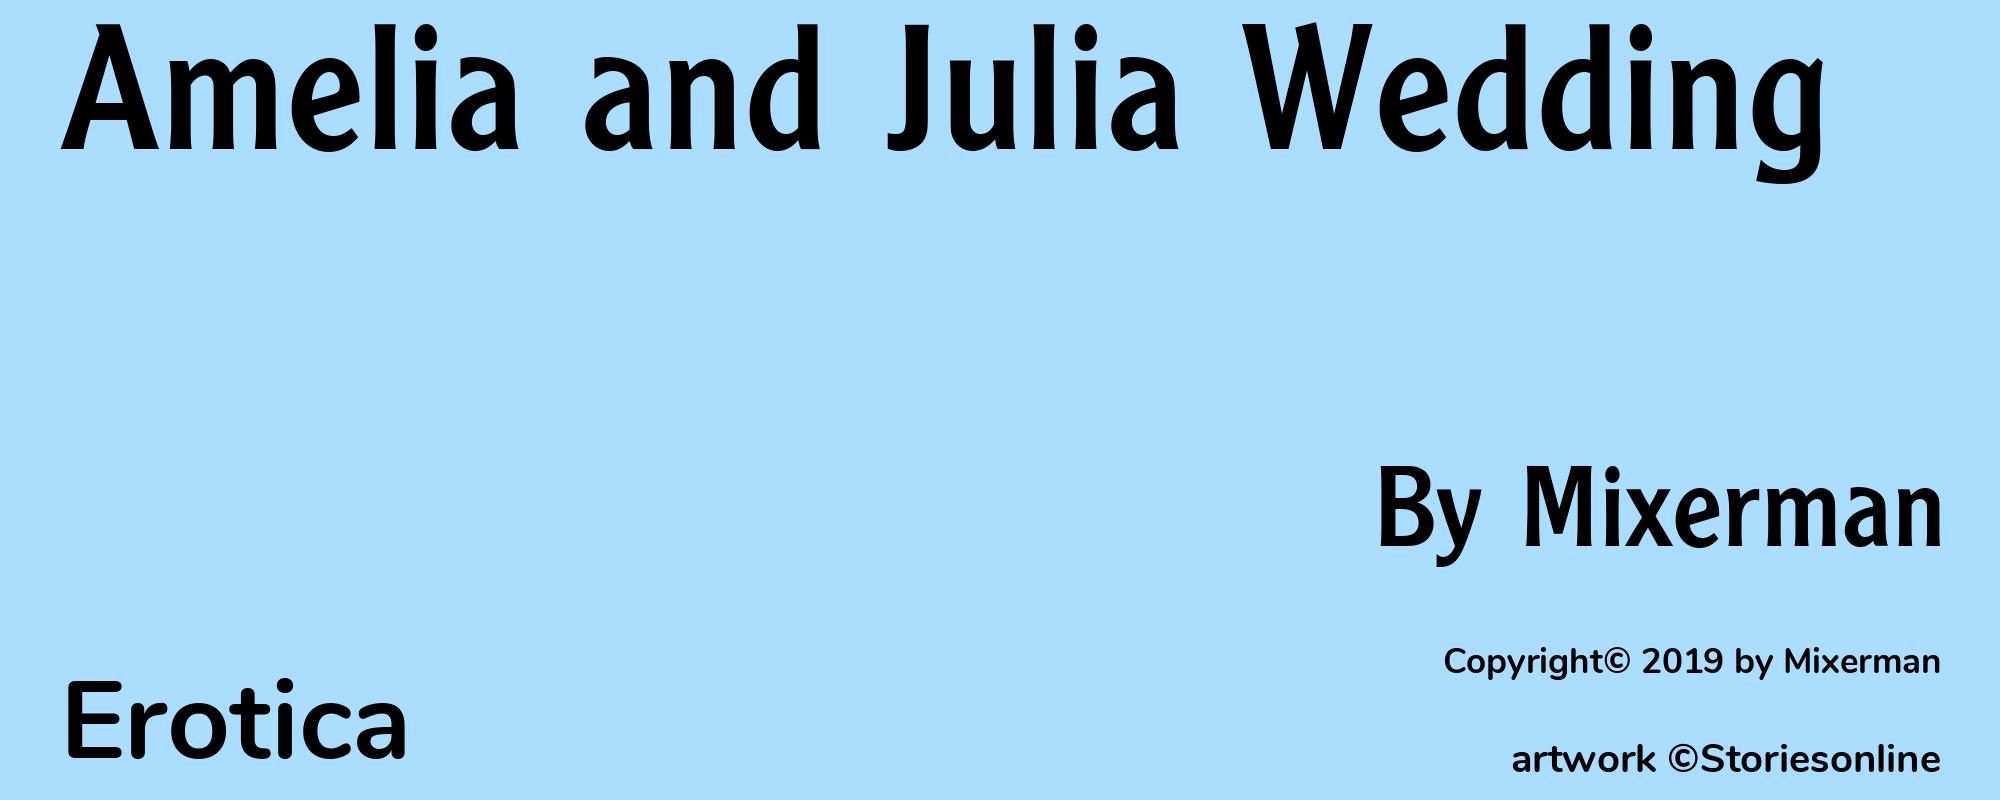 Amelia and Julia Wedding - Cover